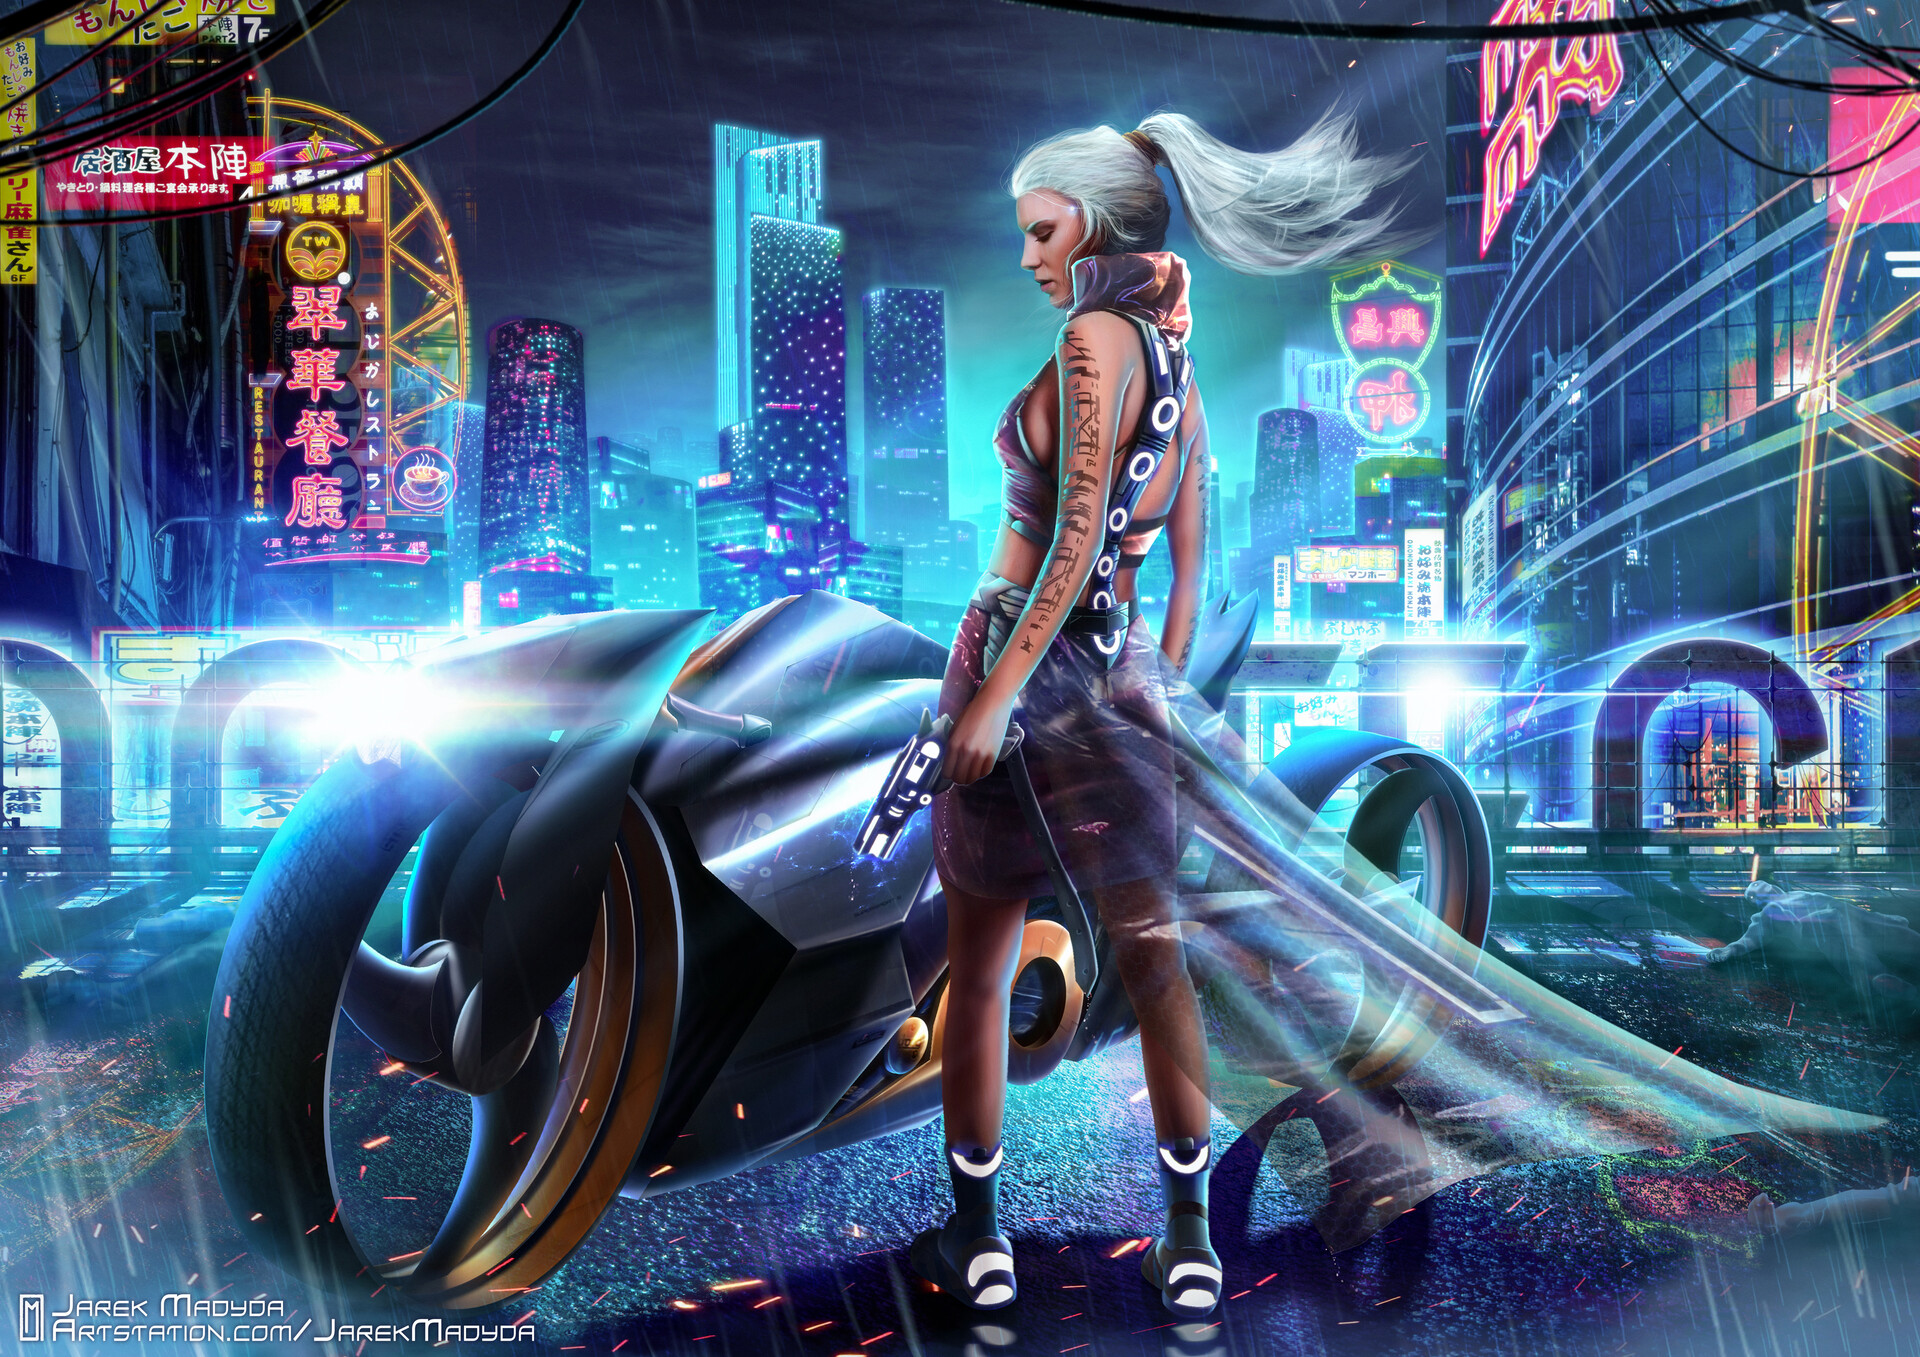 HD wallpaper: Biker girl, cyberpunk, Girl With Weapon